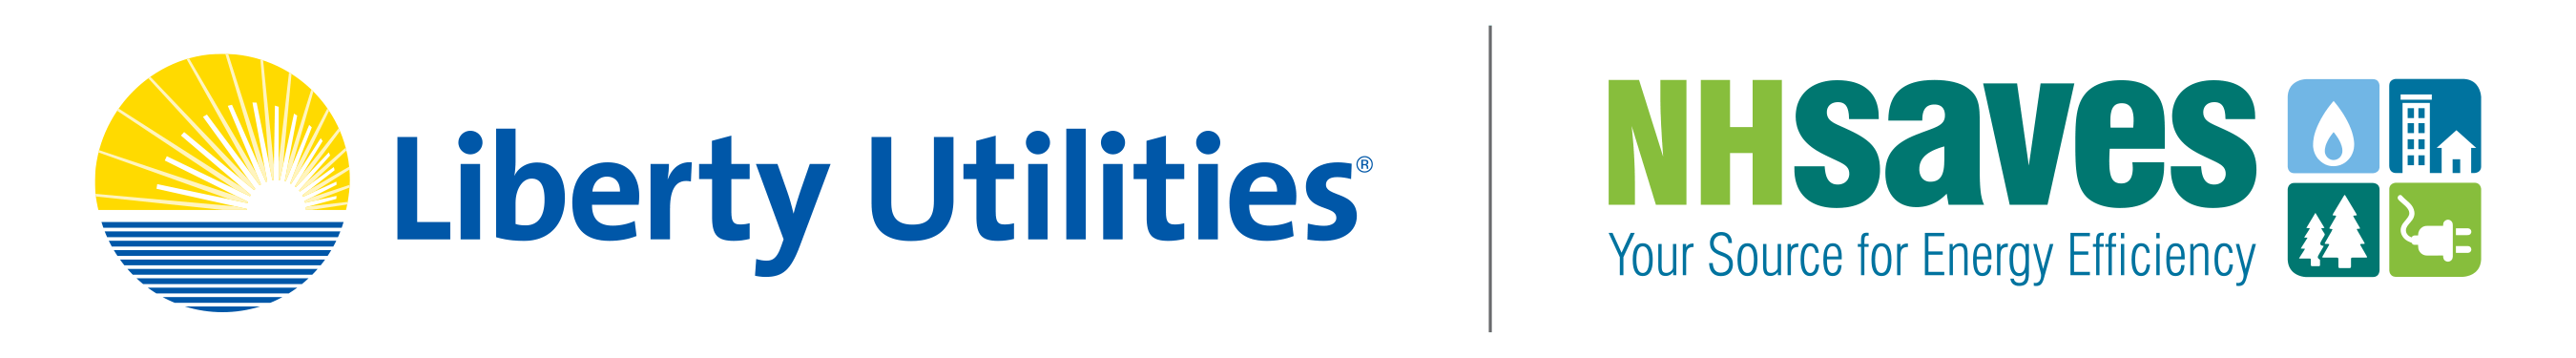 Utilities Logo - Liberty Utilities Gas Marketplace